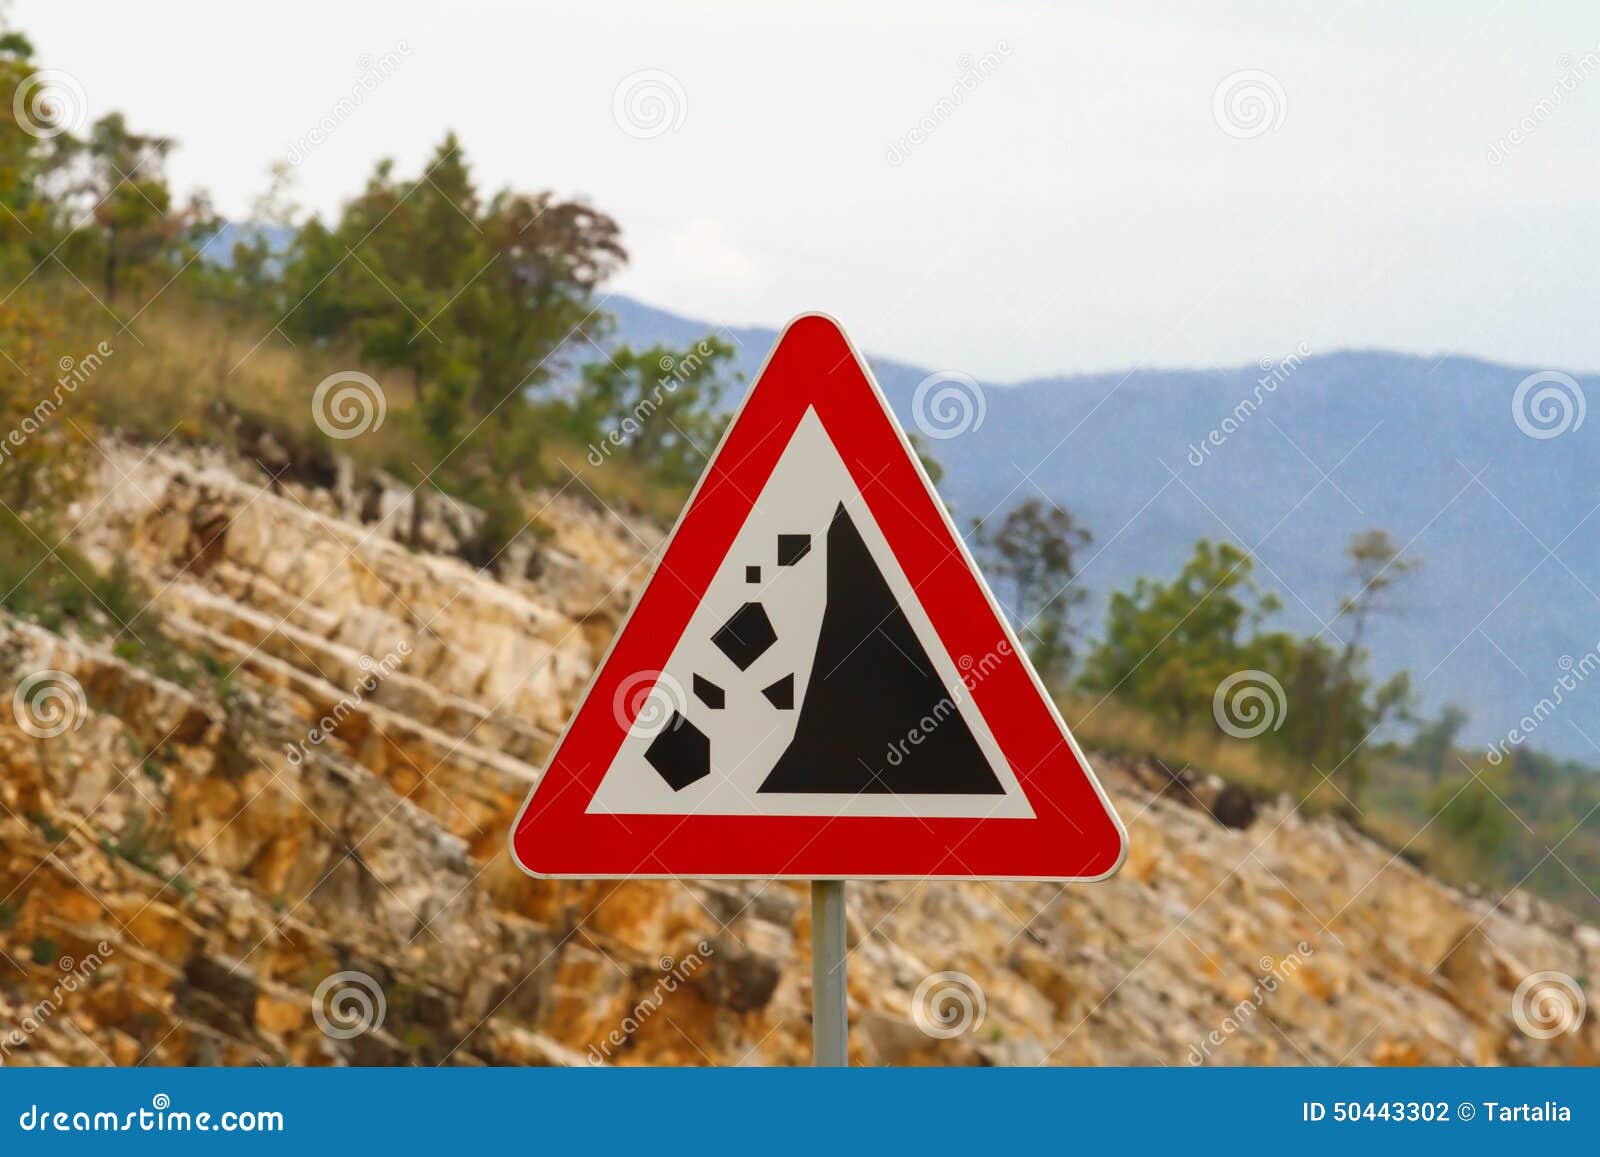 Warning Stone Fall Road Sign On Mountain Road Stock Photo Megapixl